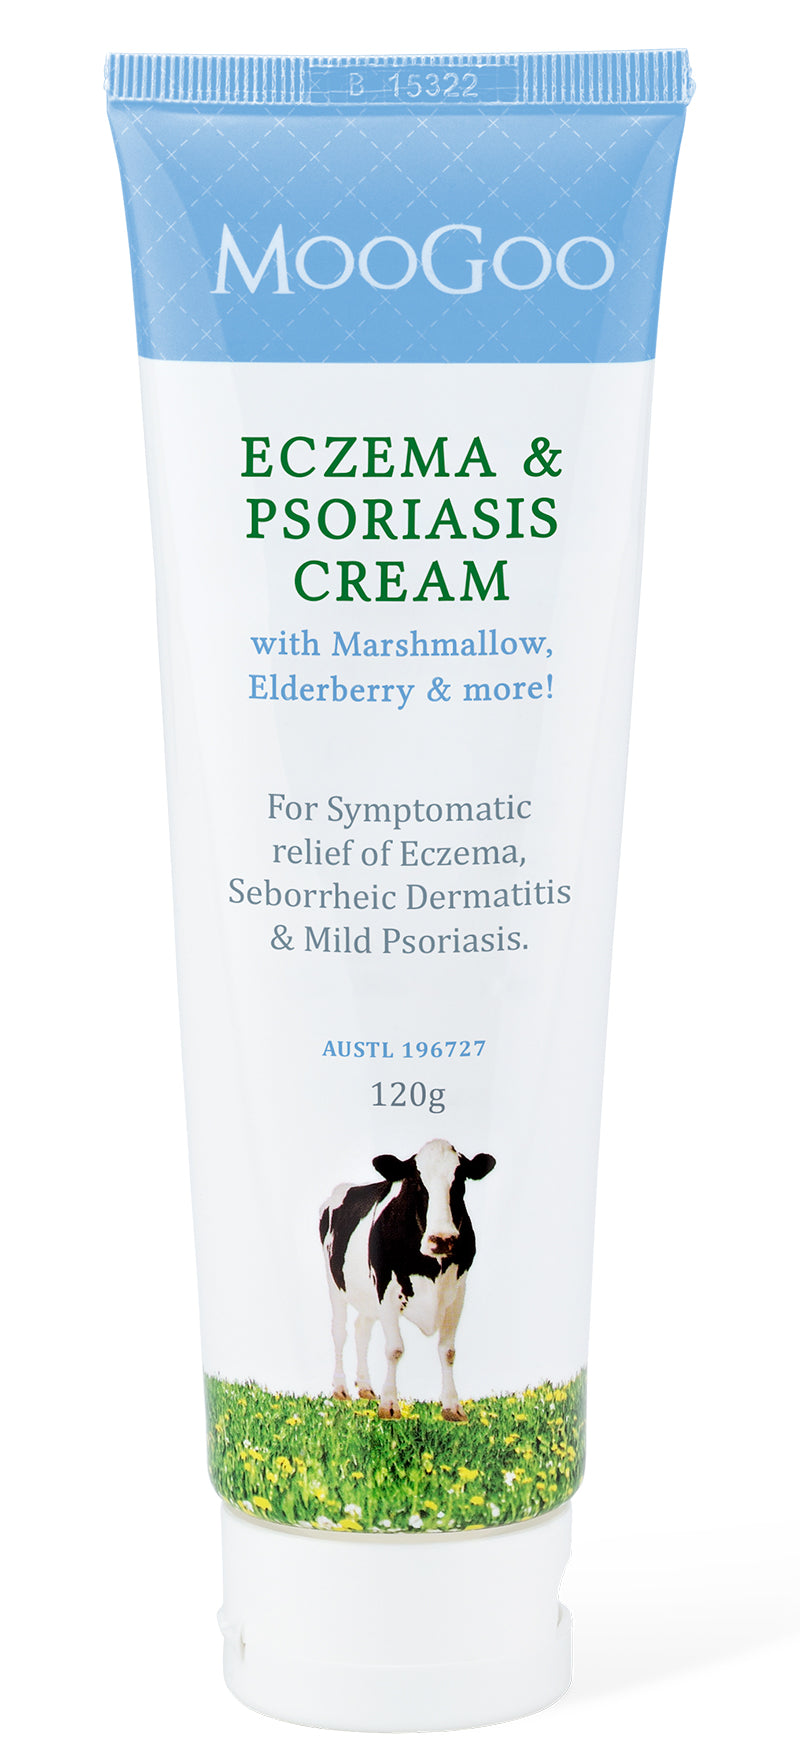 Moogoo Eczema & Psoriasis Cream Marshmallow 120g